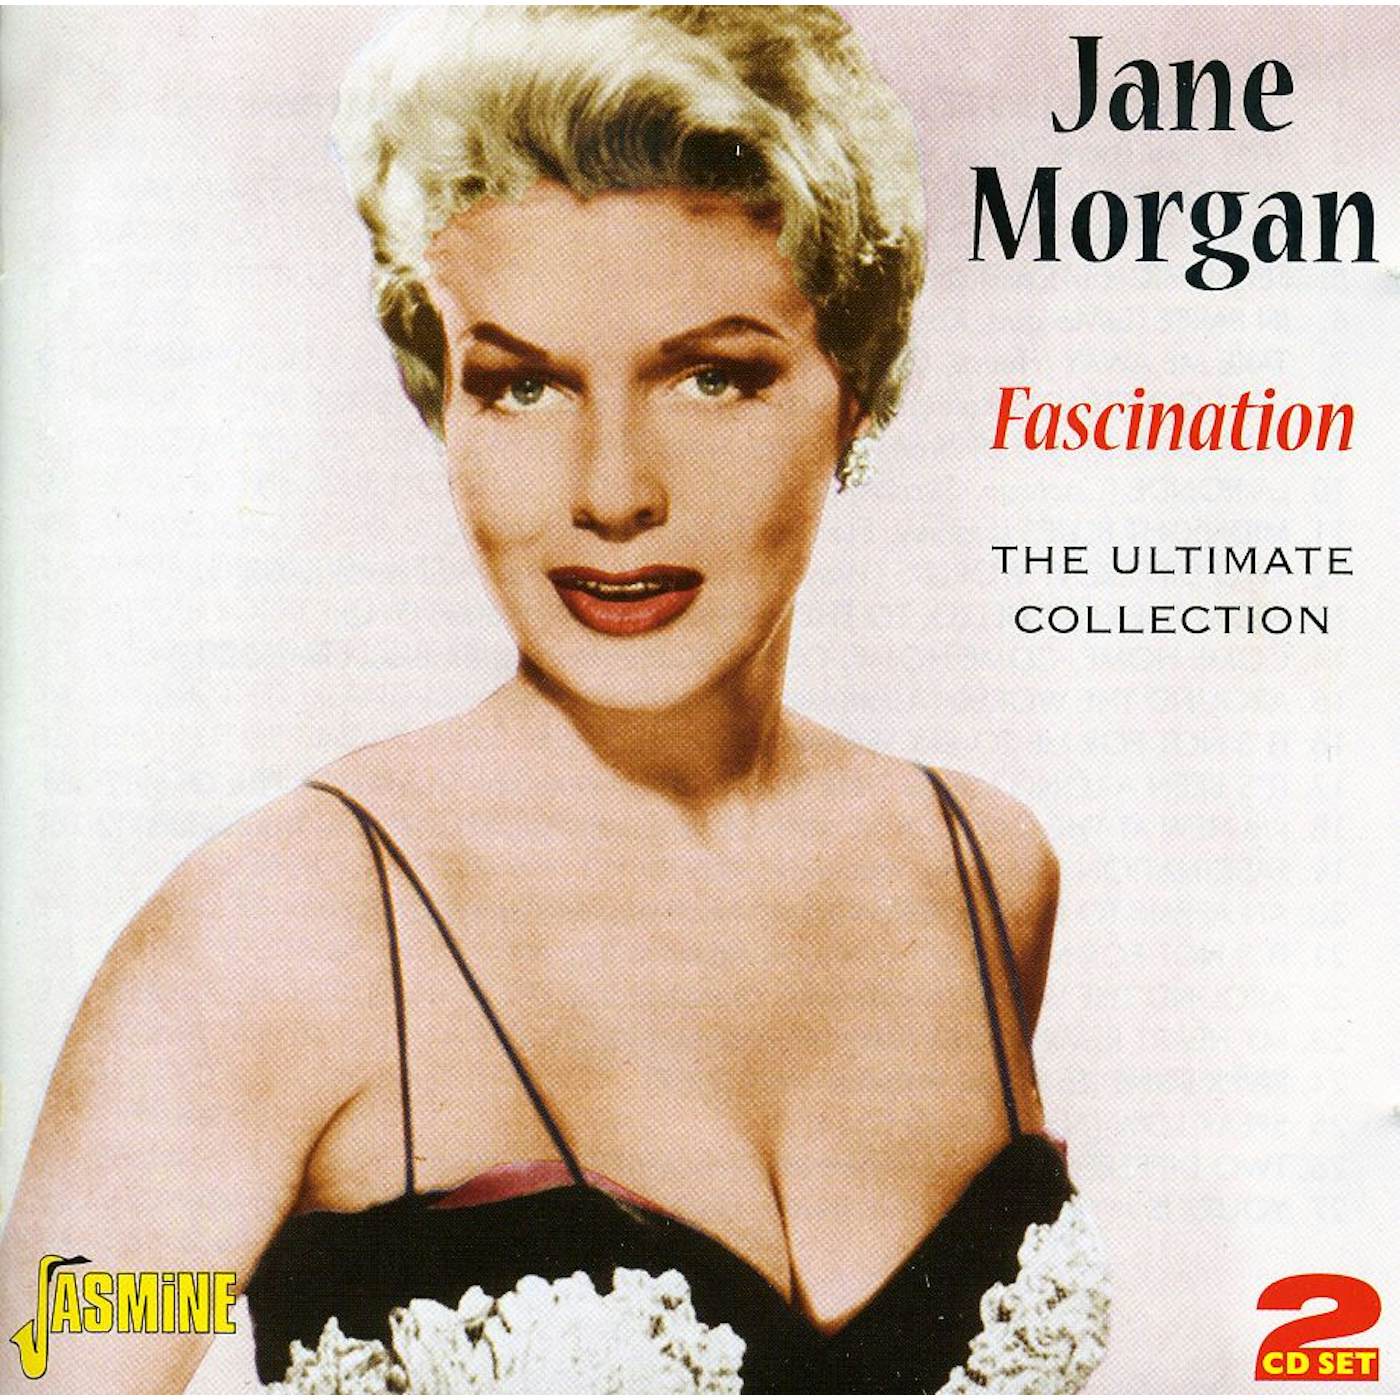 Jane Morgan FASCINATION CD